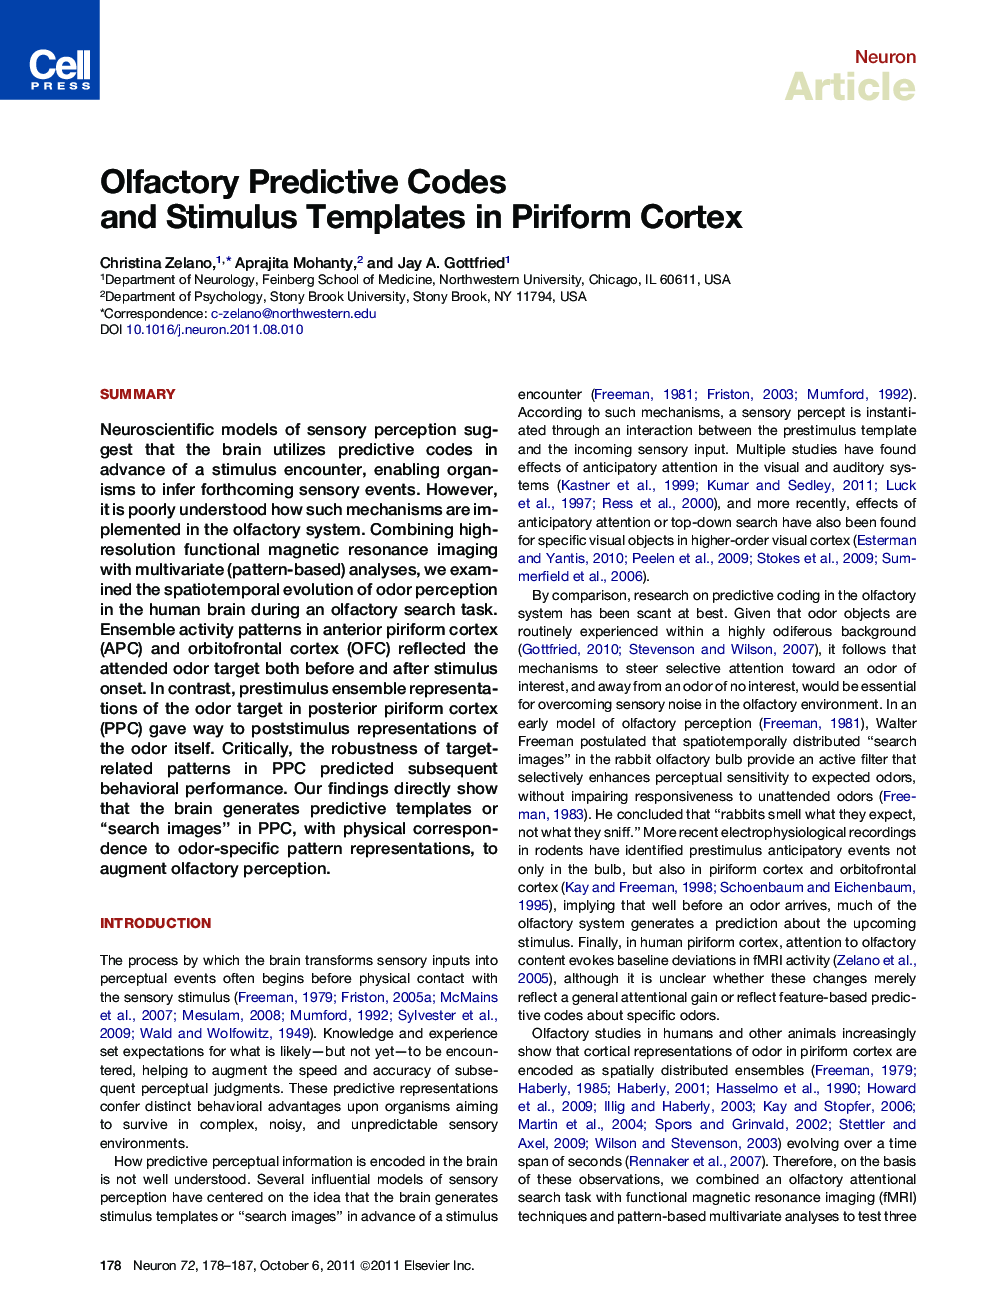 Olfactory Predictive Codes and Stimulus Templates in Piriform Cortex